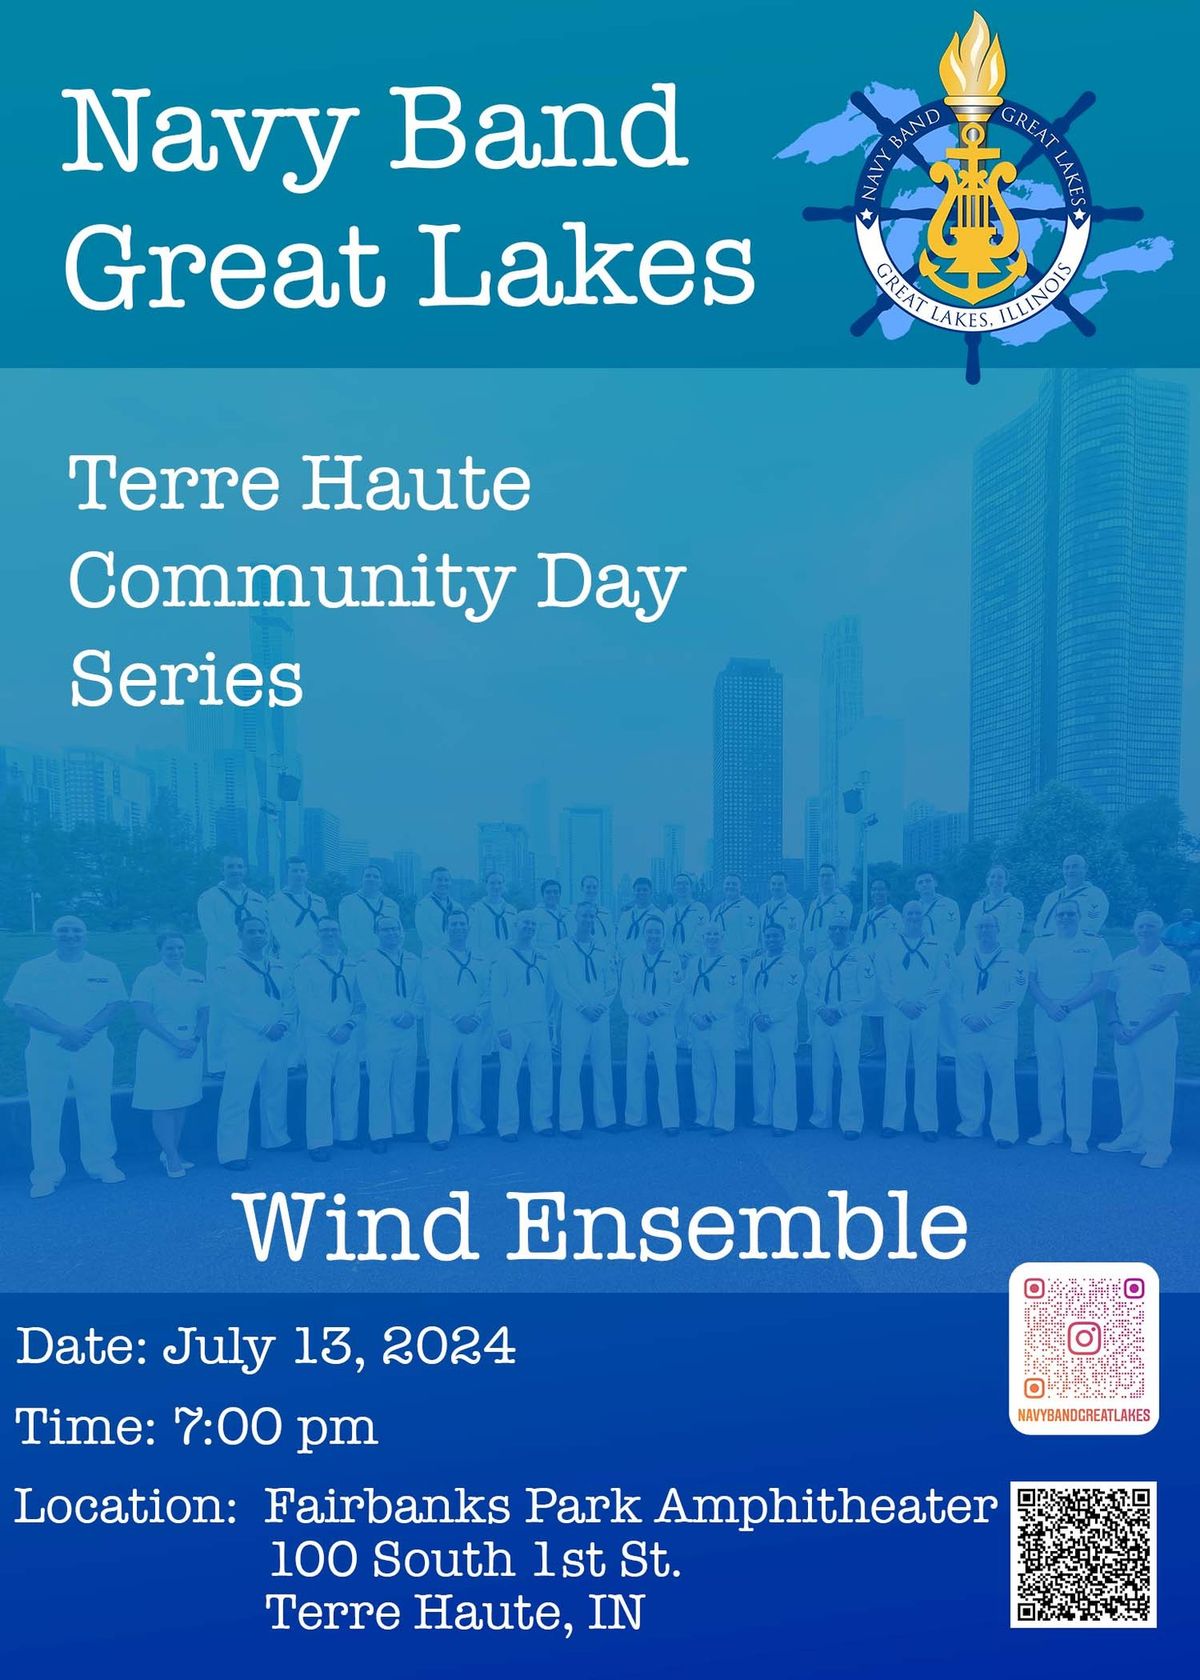 Navy Band Great Lakes Wind Ensemble